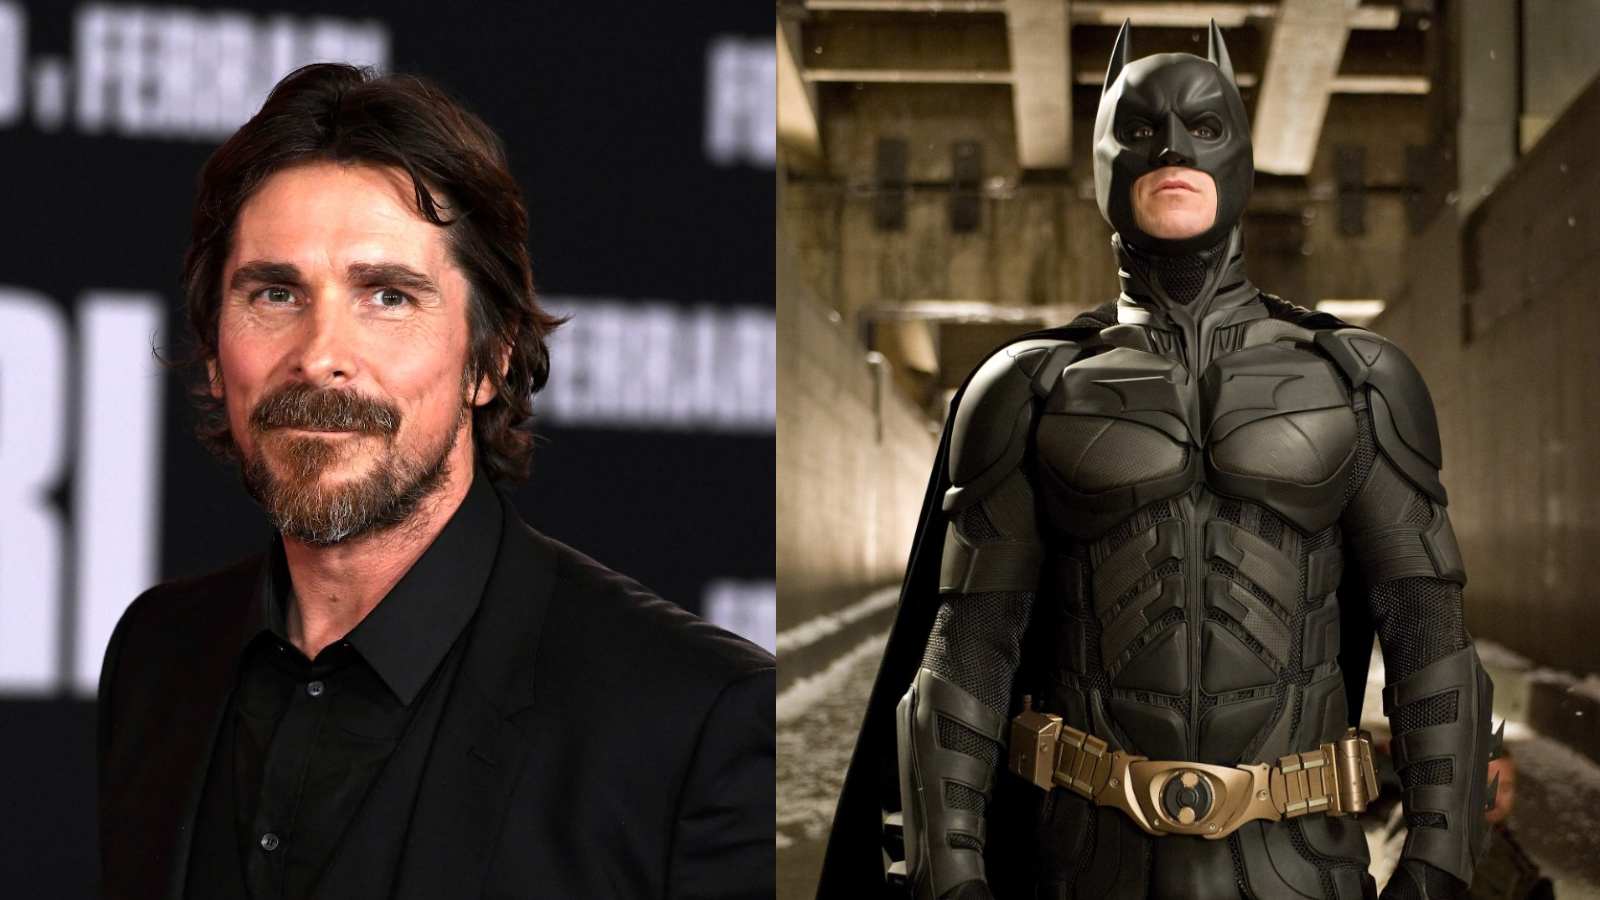 Christian Bale and his Batman suit